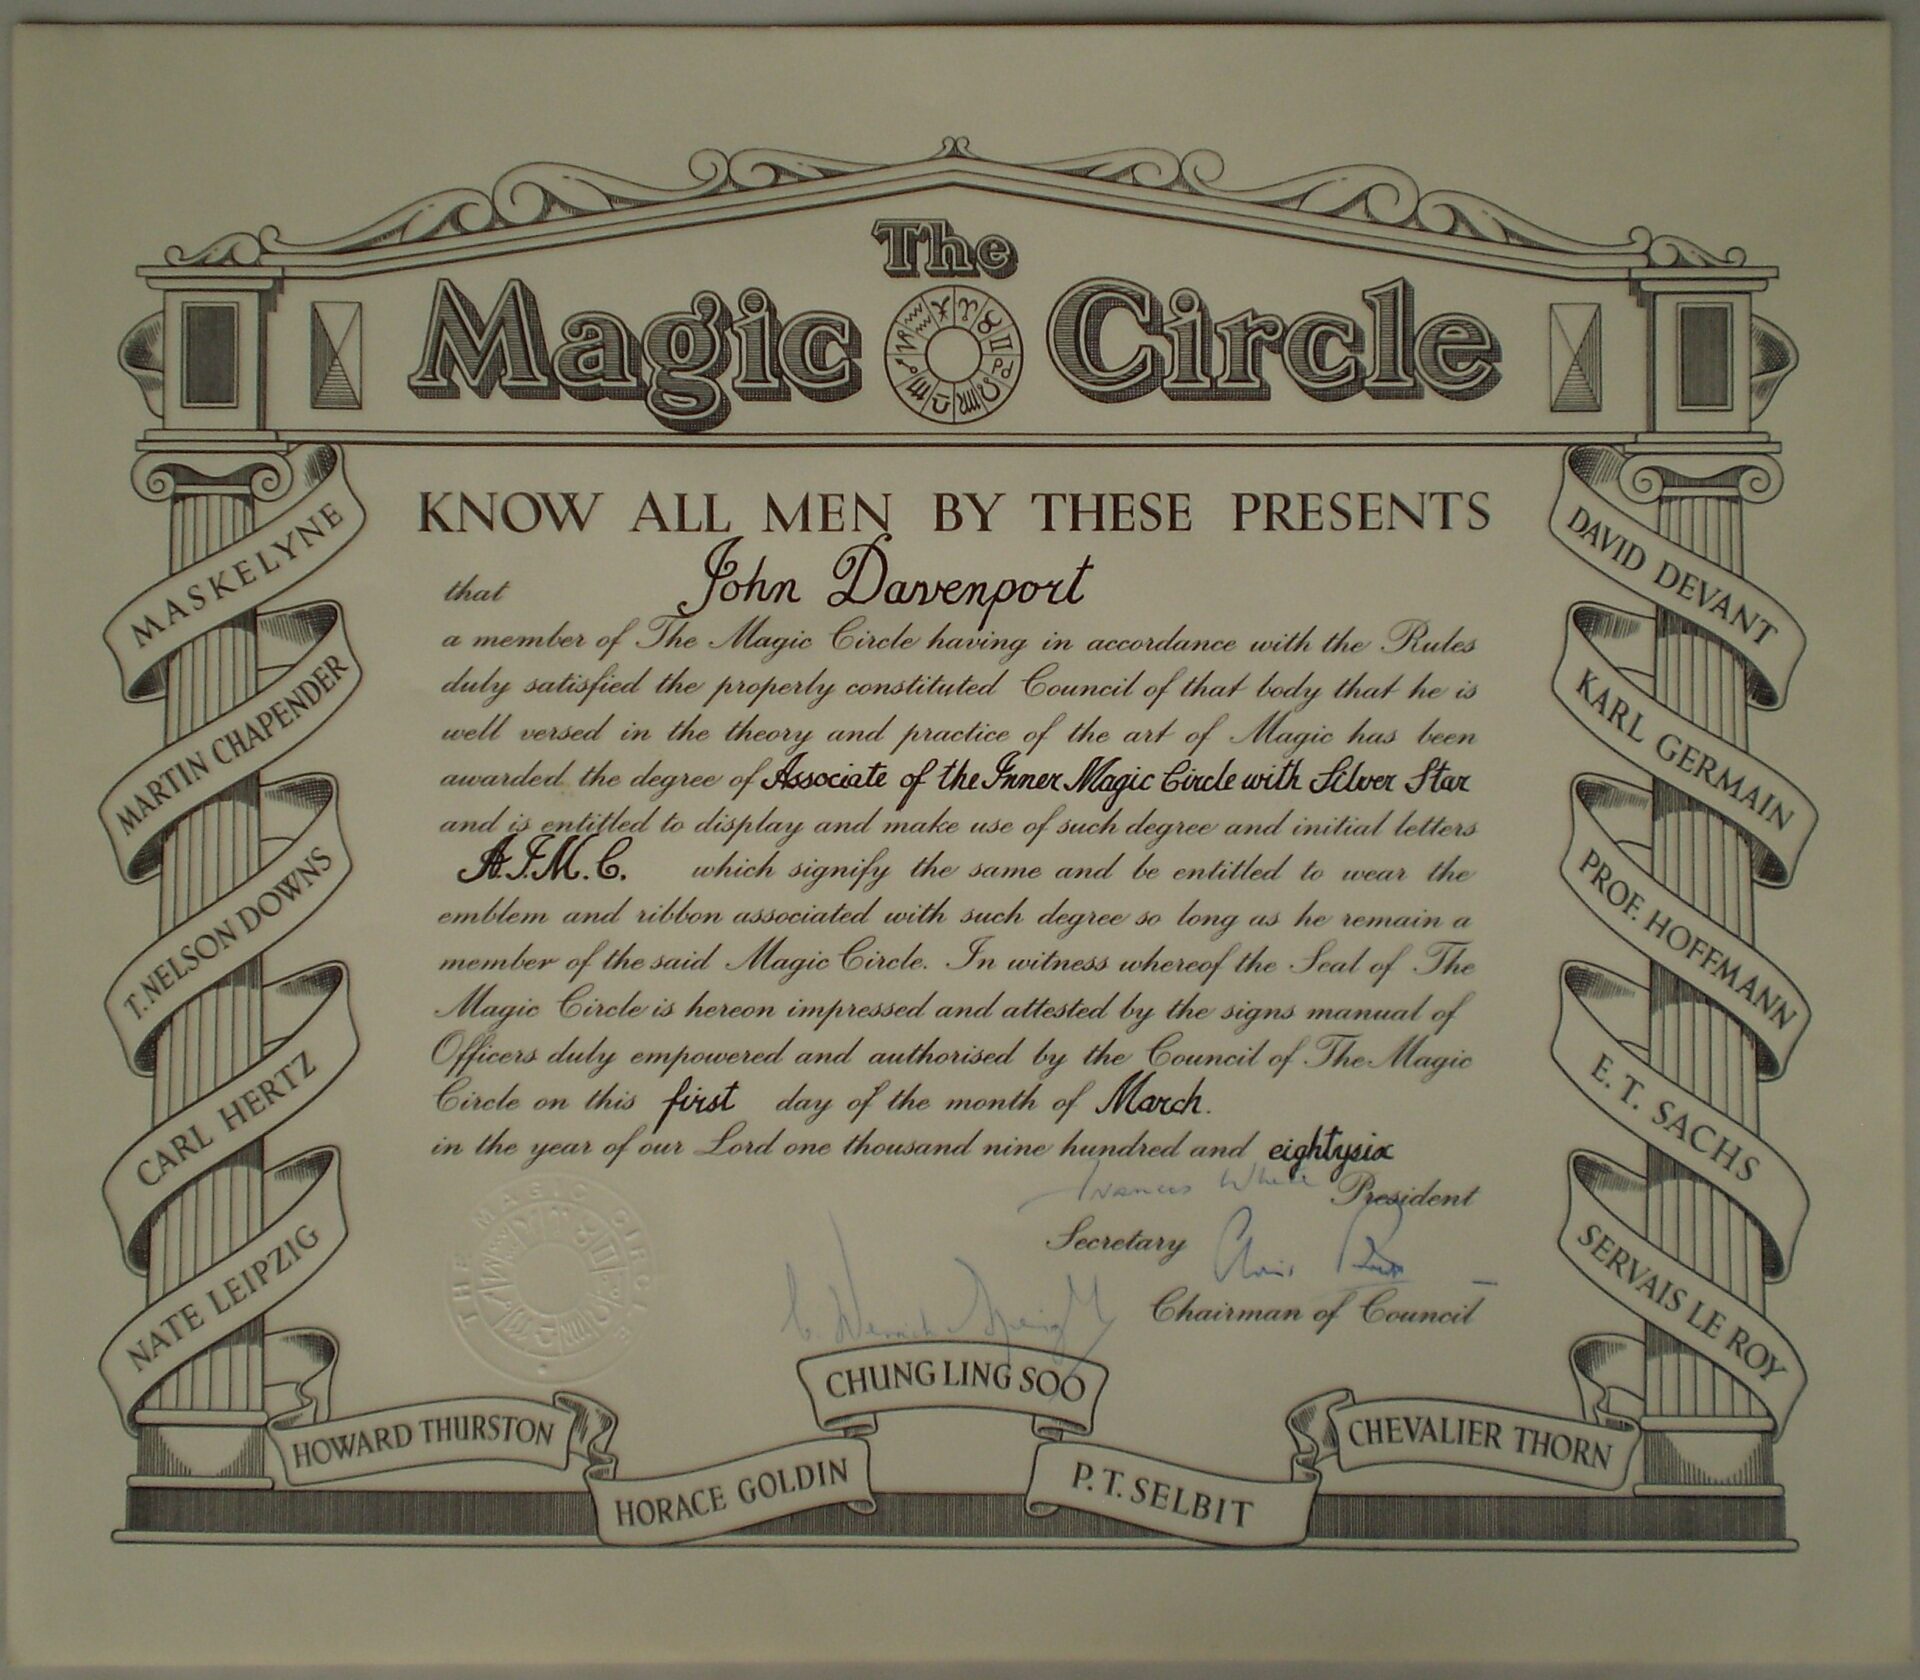 John Davenport’s AIMC certificate from The Magic Circle